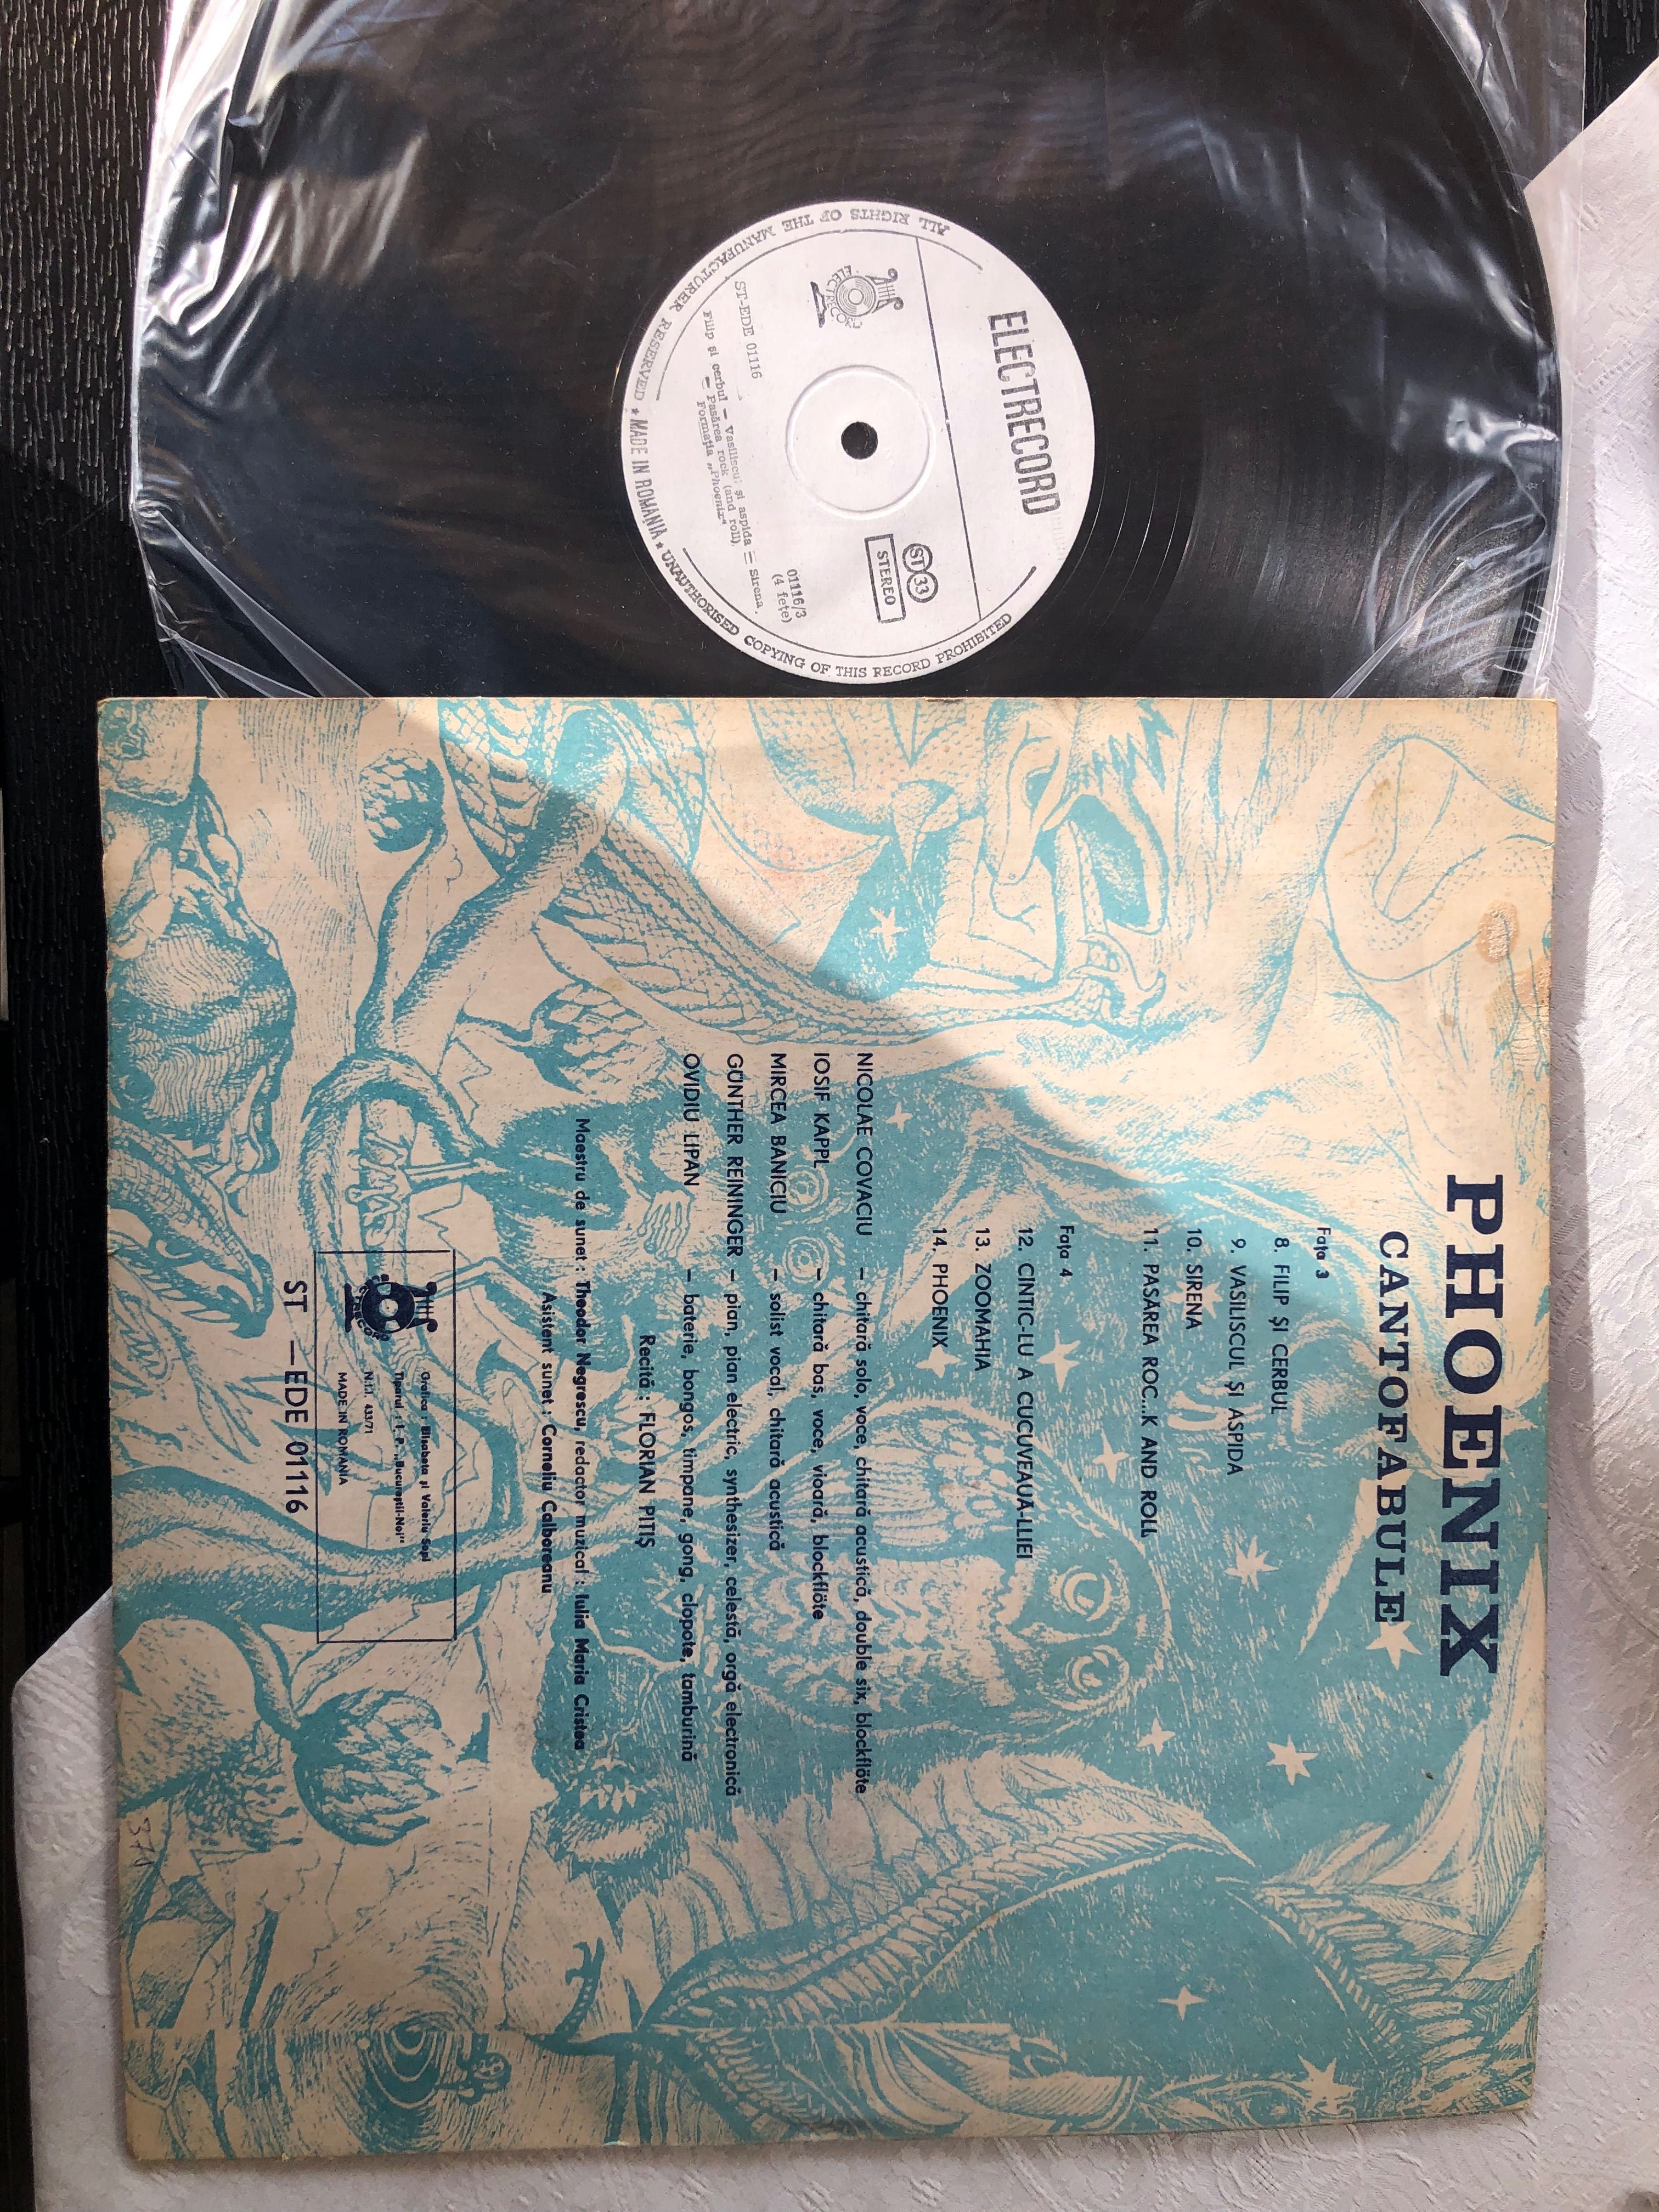 Vinyl Phoenix Cantofabule